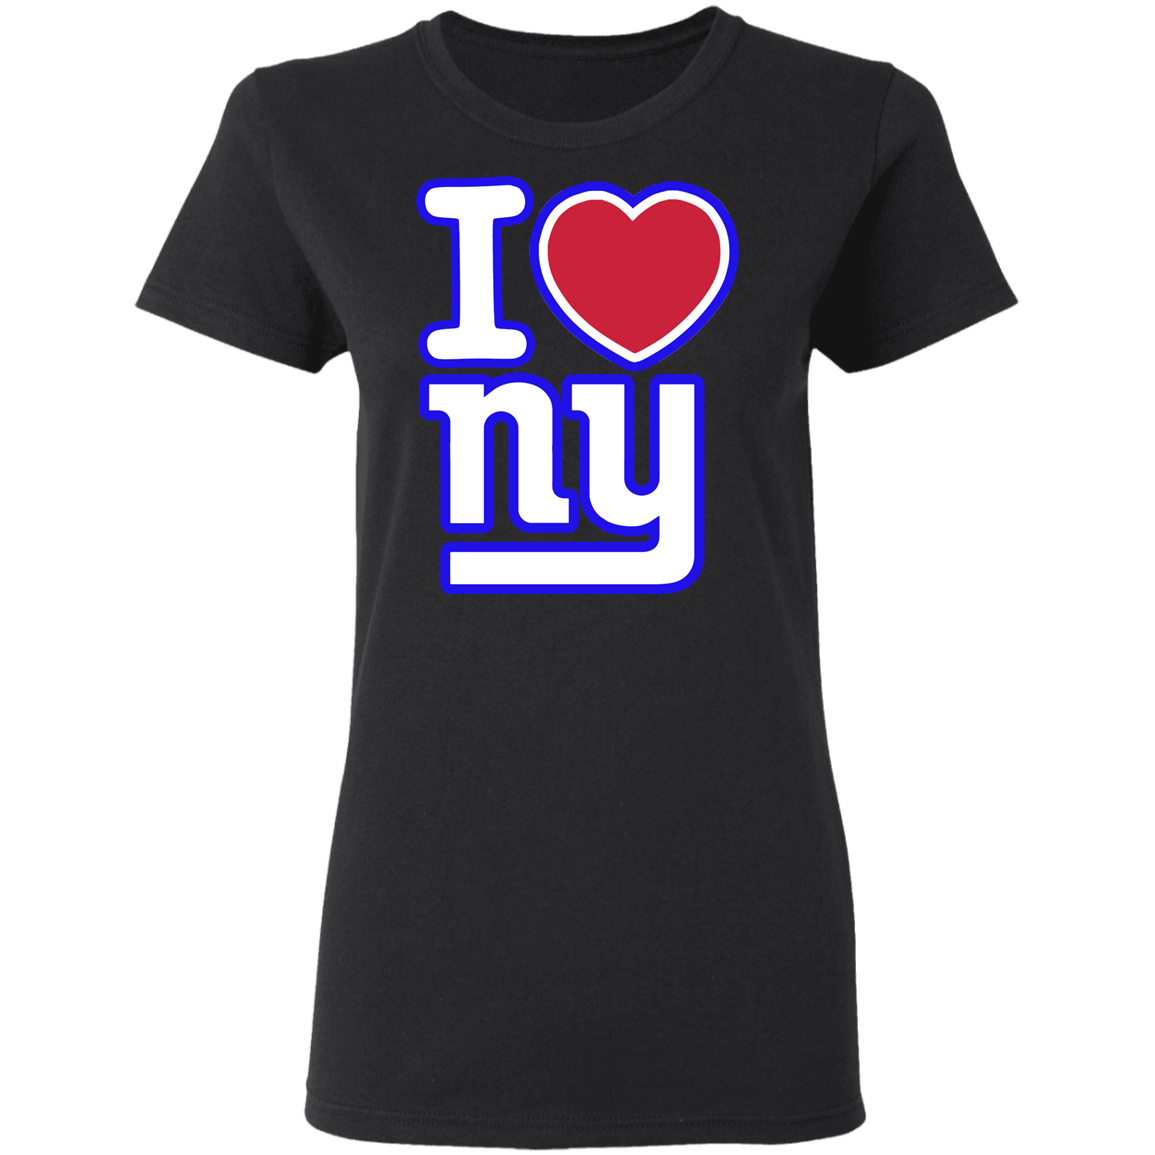 ArtichokeUSA Custom Design. I heart New York Giants. NY Giants Football Fan Art. Ladies' 5.3 oz. T-Shirt